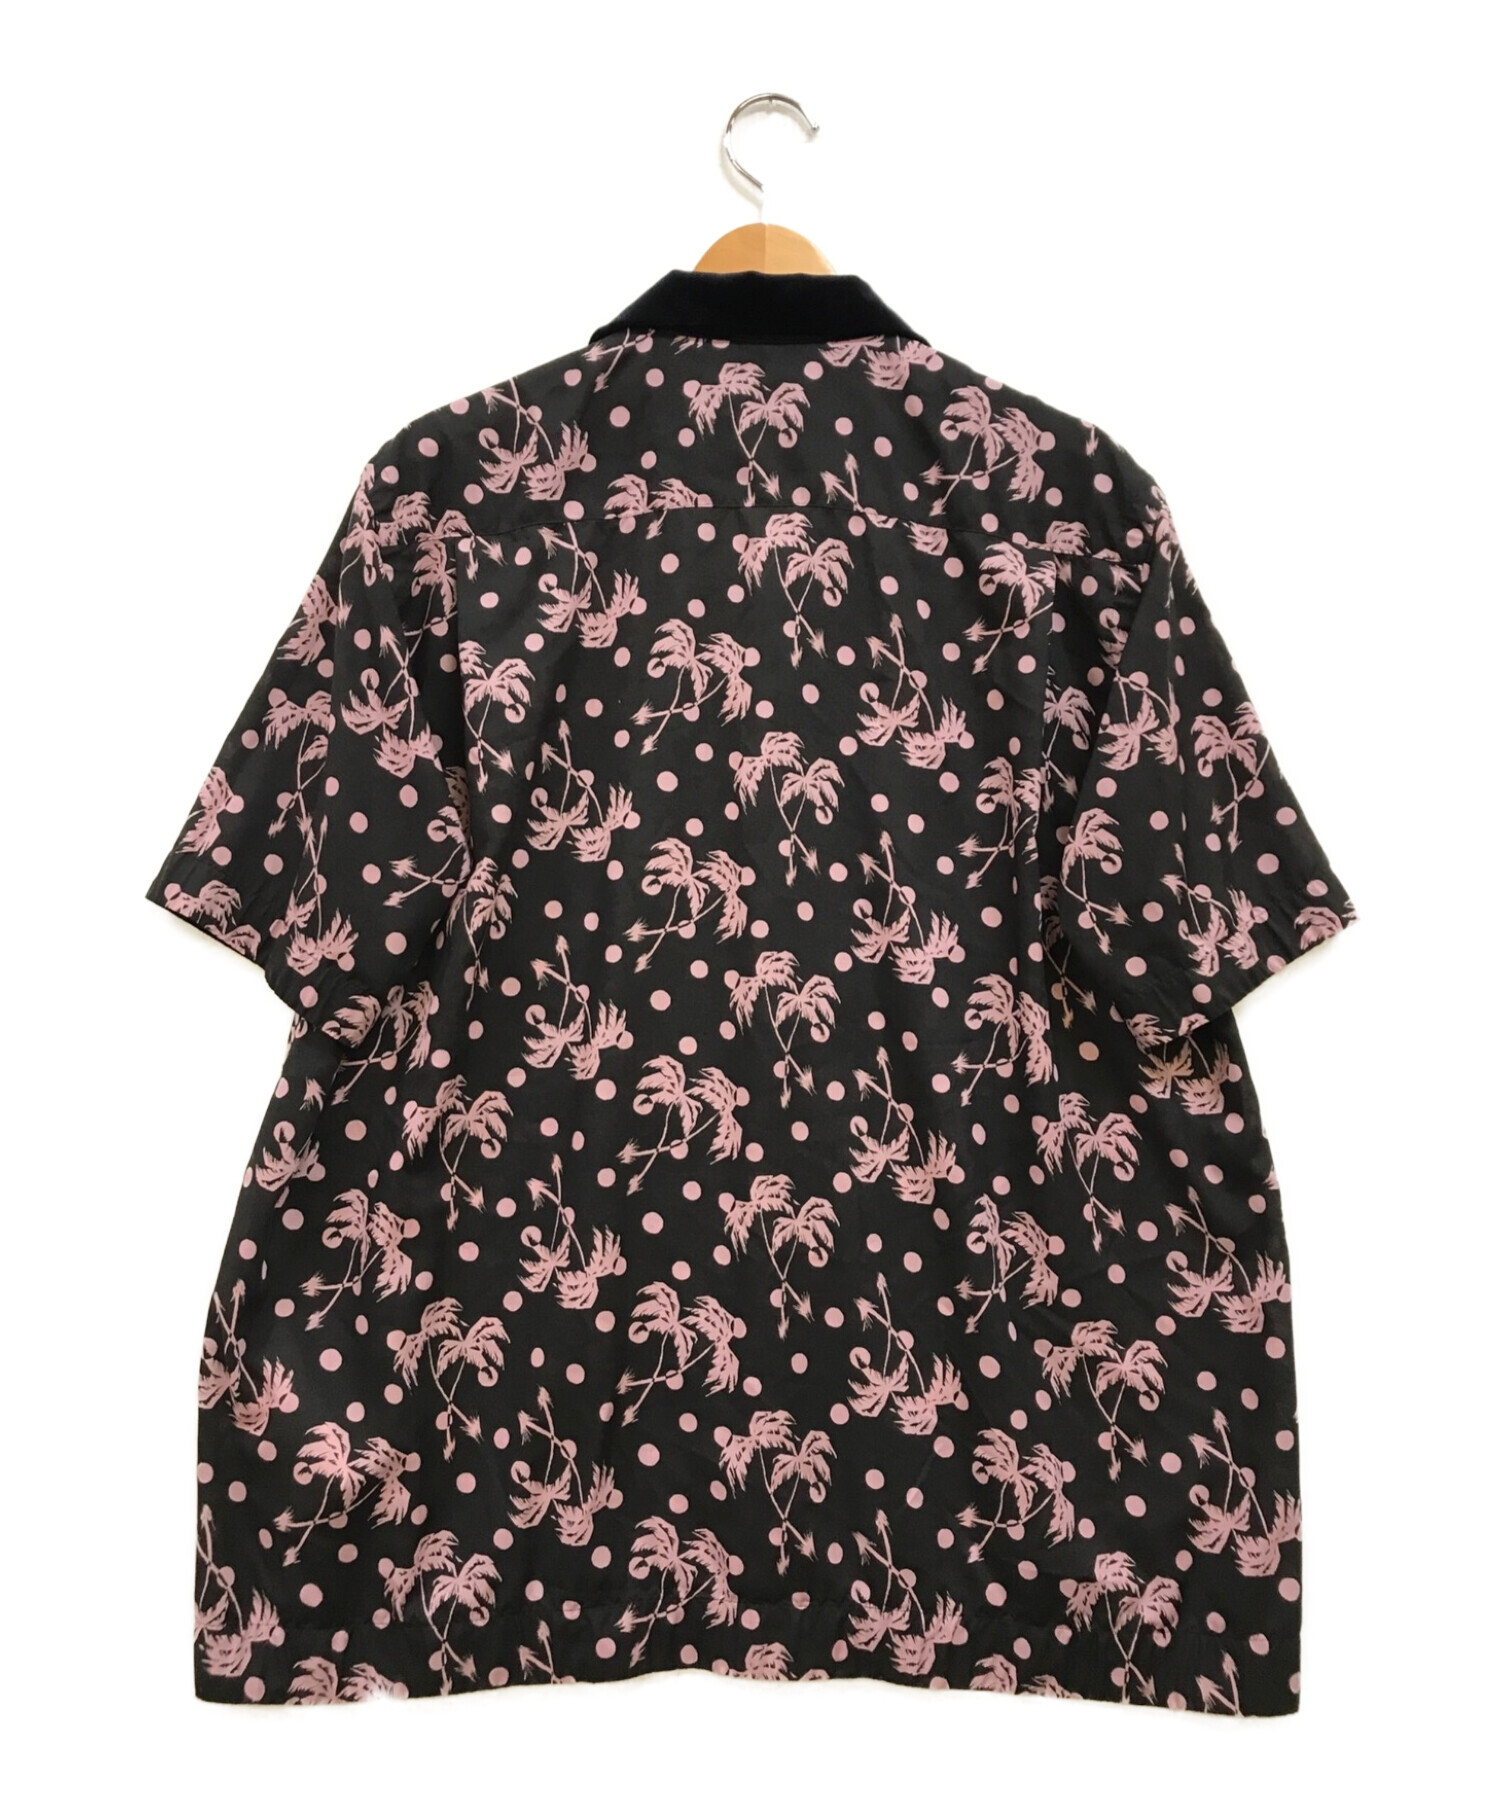 sacai × SUN SURF (サカイ × サンサーフ) パームツリーオープンカラーアロハシャツ ブラック×ピンク サイズ:2